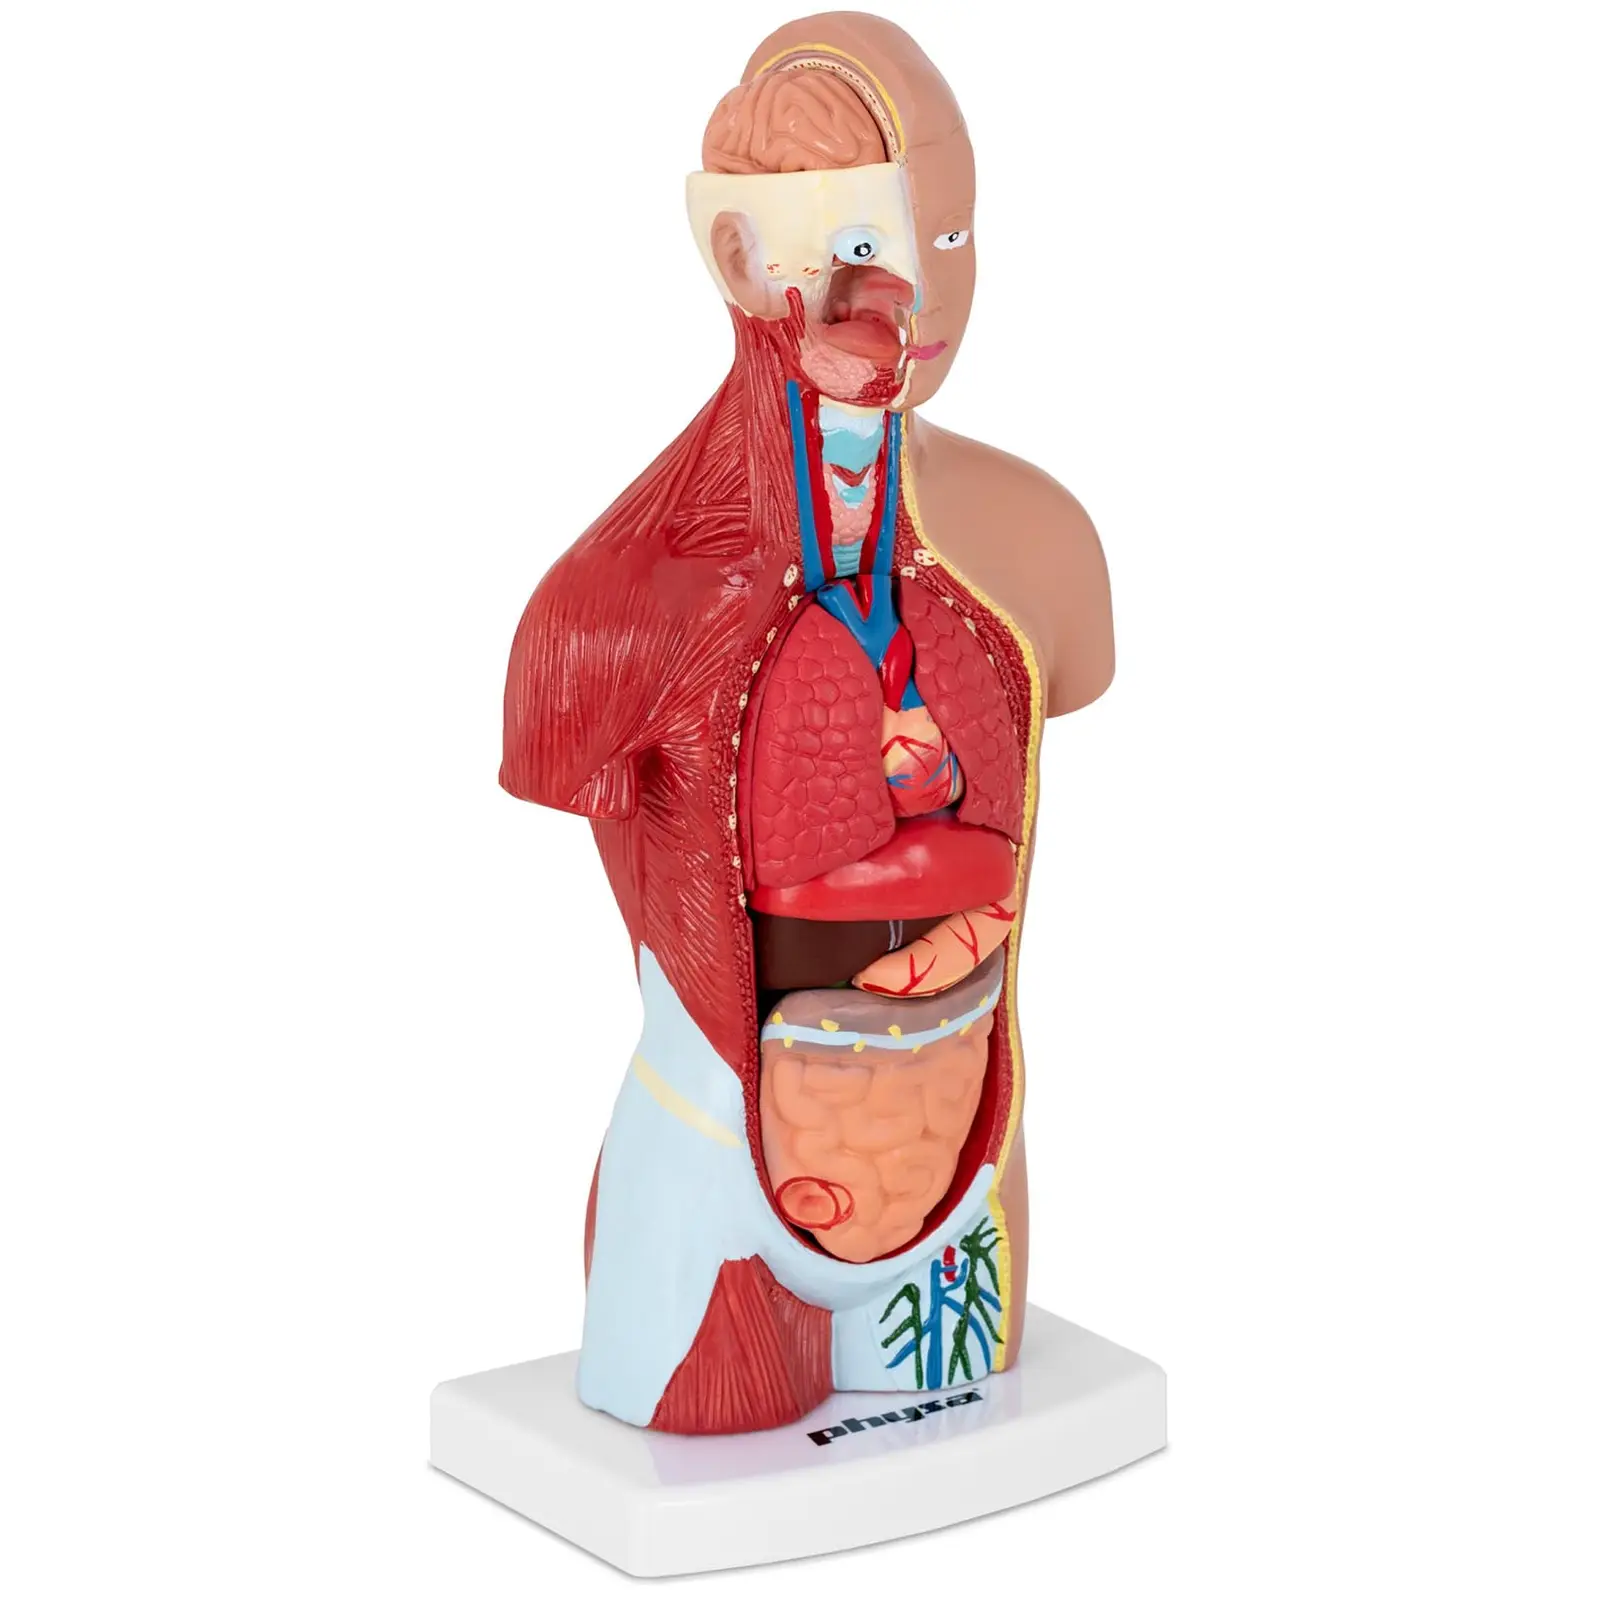 Tronco humano - modelo anatómico